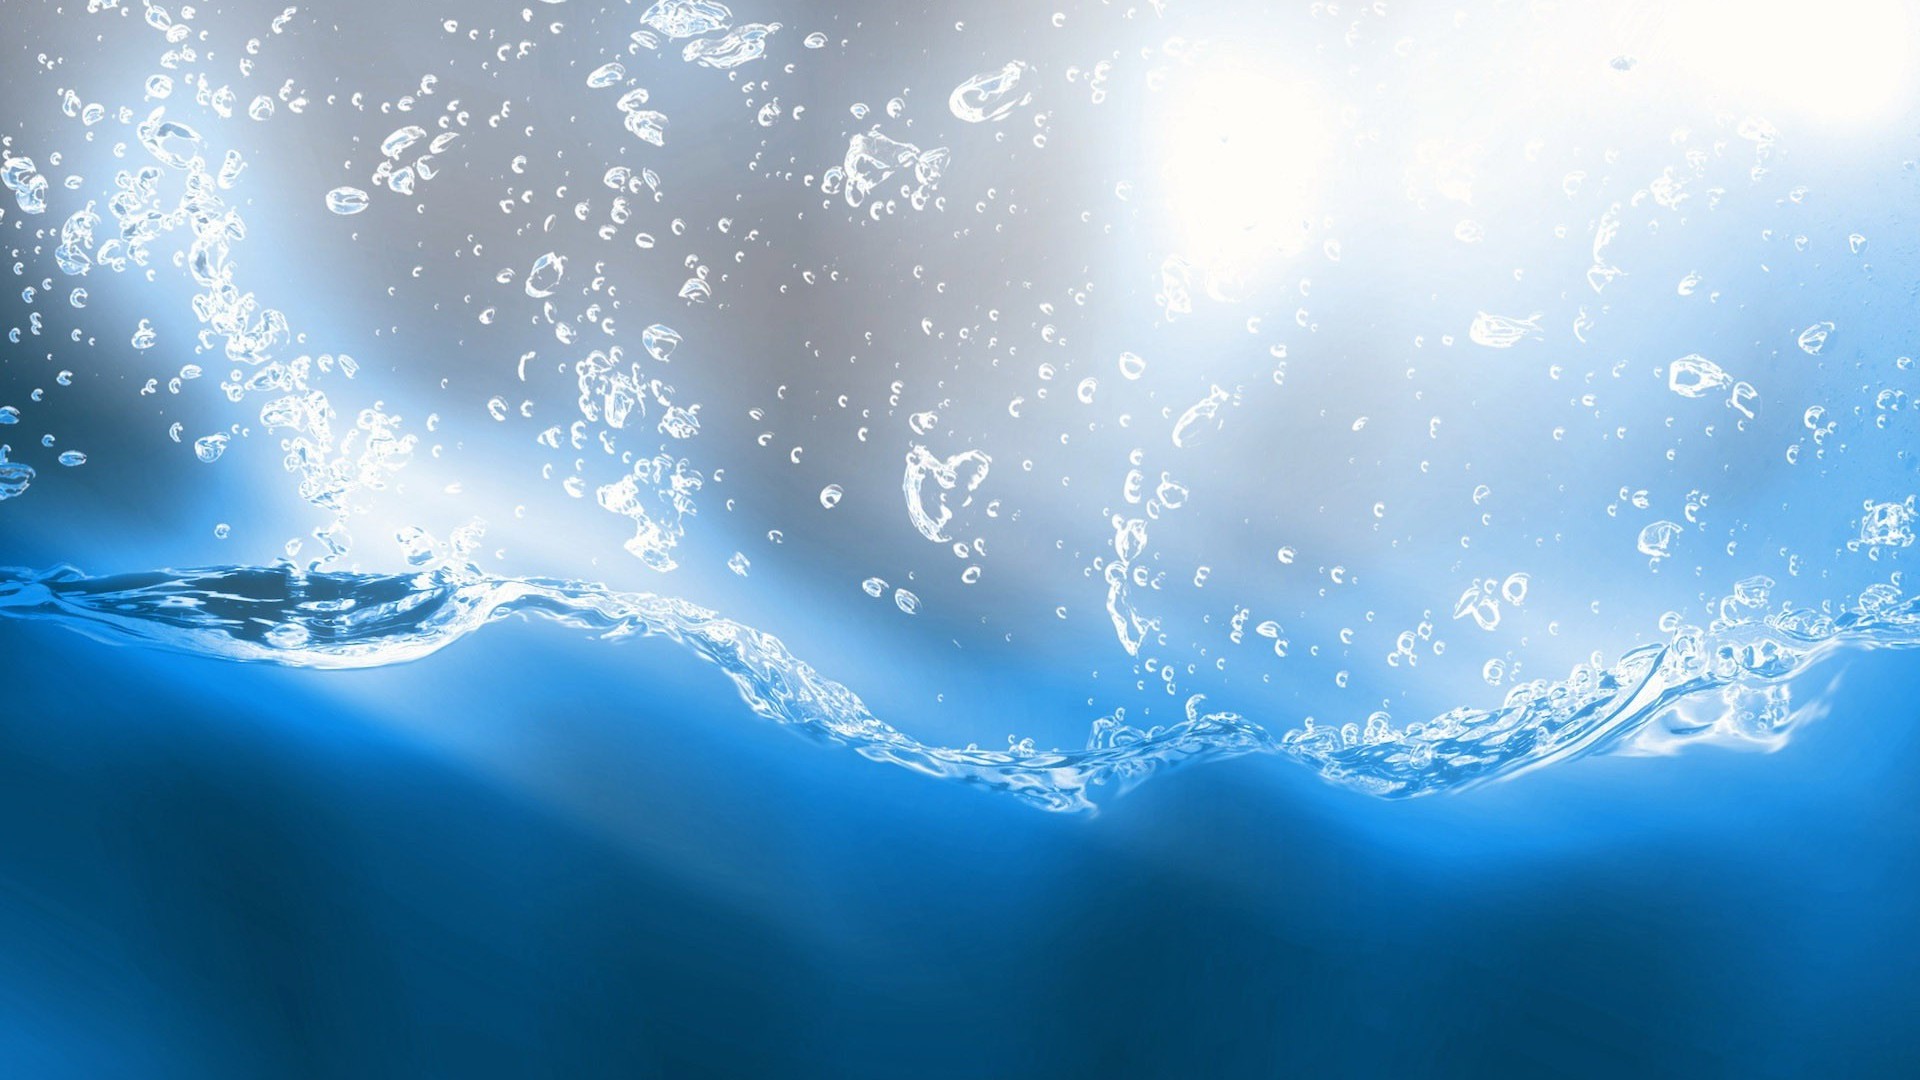 Water drops Widescreen Wallpaper